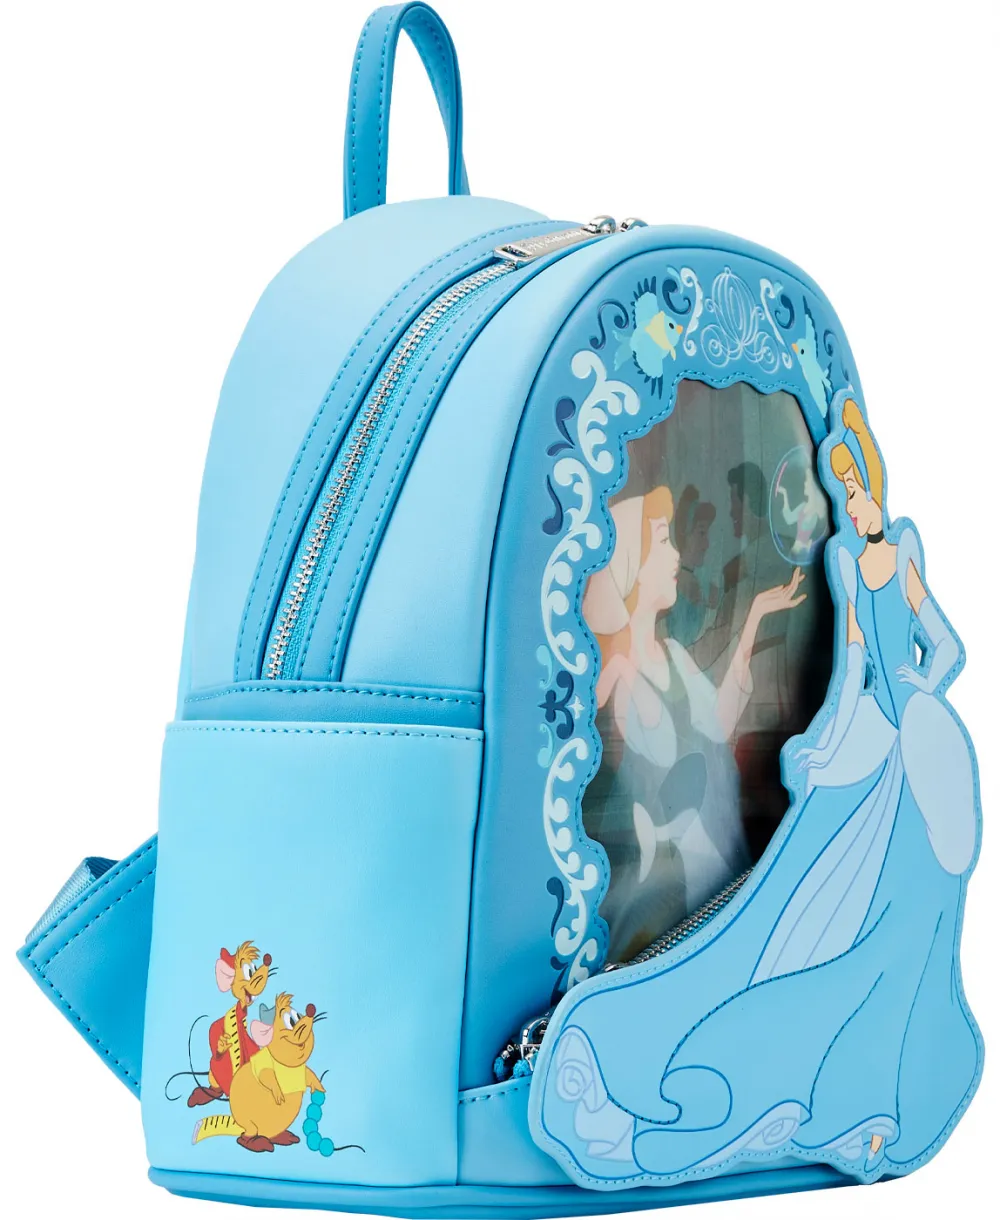 Cinderella Lenticular Princess Series Mini Backpack Loungefly